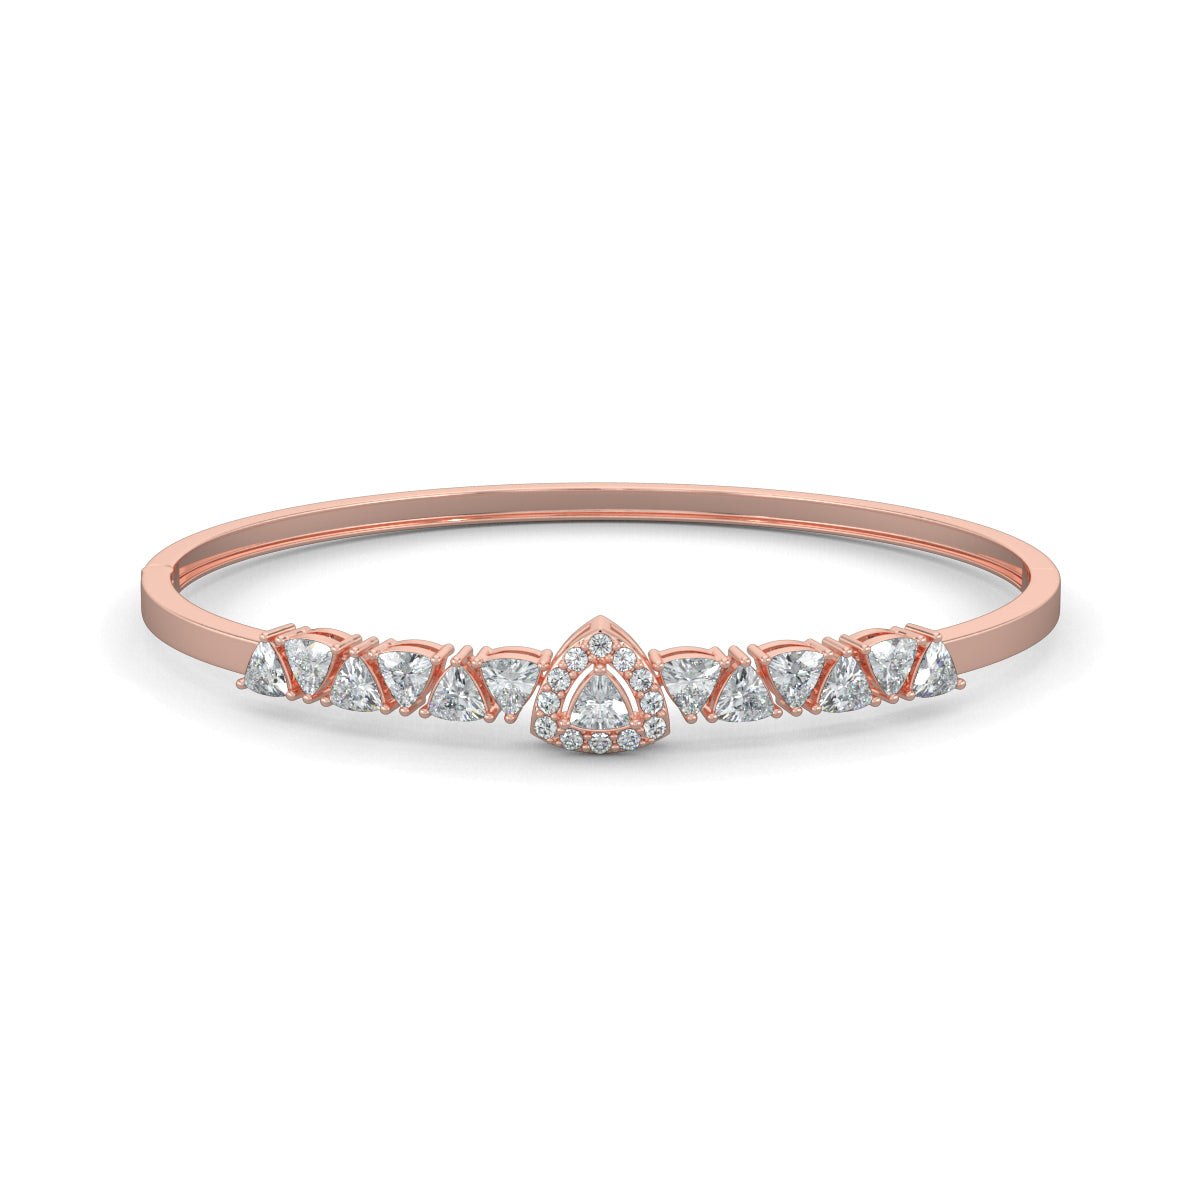 Rose Gold, Diamond Bracelet, Natural diamond bracelet, Lab-grown diamond bracelet, Oval diamond bracelet, Trillion-cut diamond bracelet, Pave-set diamond bracelet, Ethical diamond jewelry